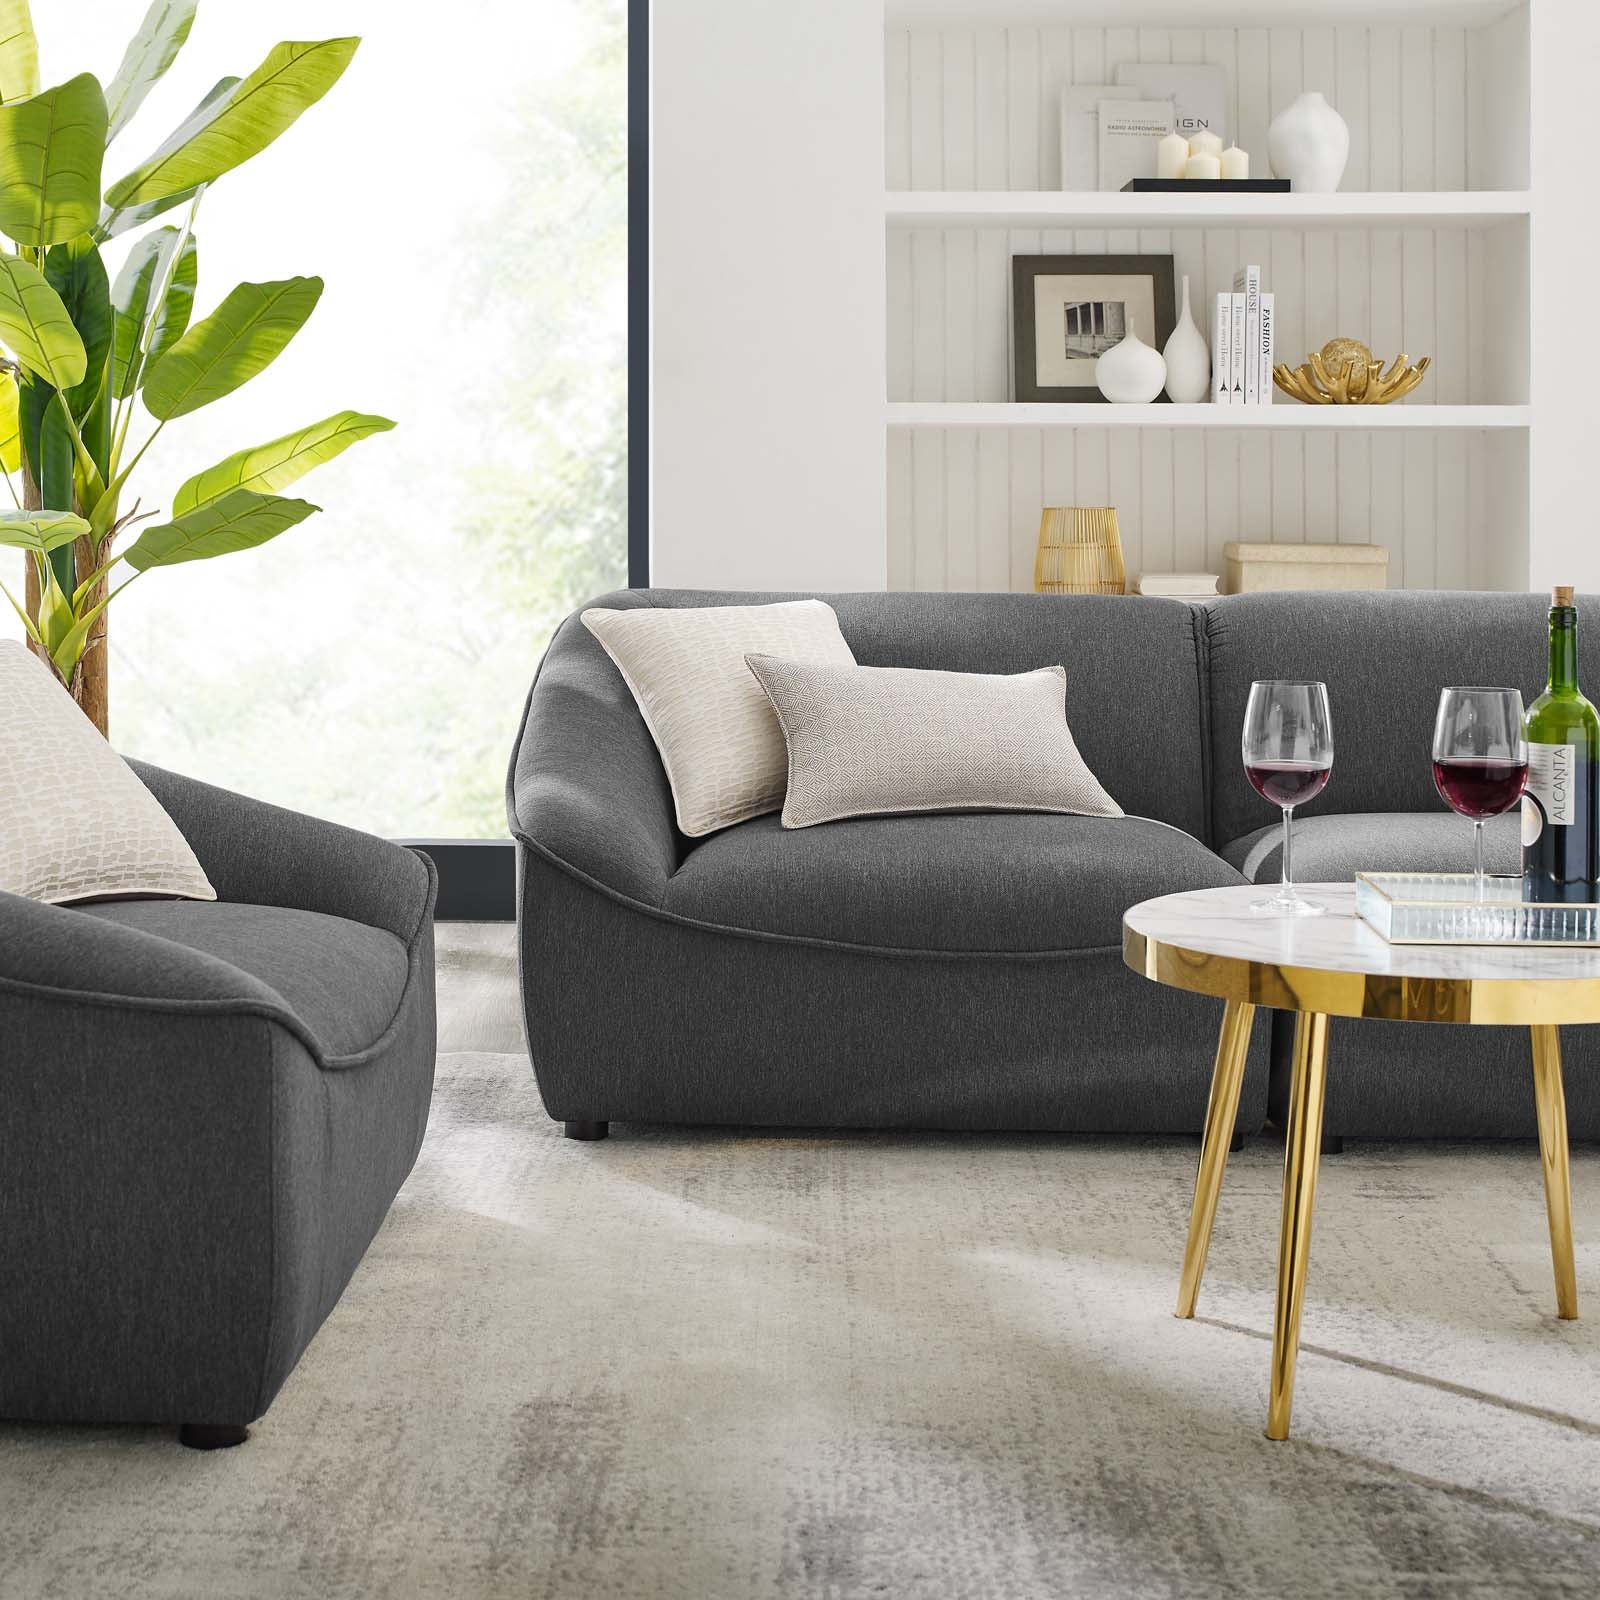 Modway Living Room Sets - Comprise-4-Piece-Living-Room-Set-Charcoal